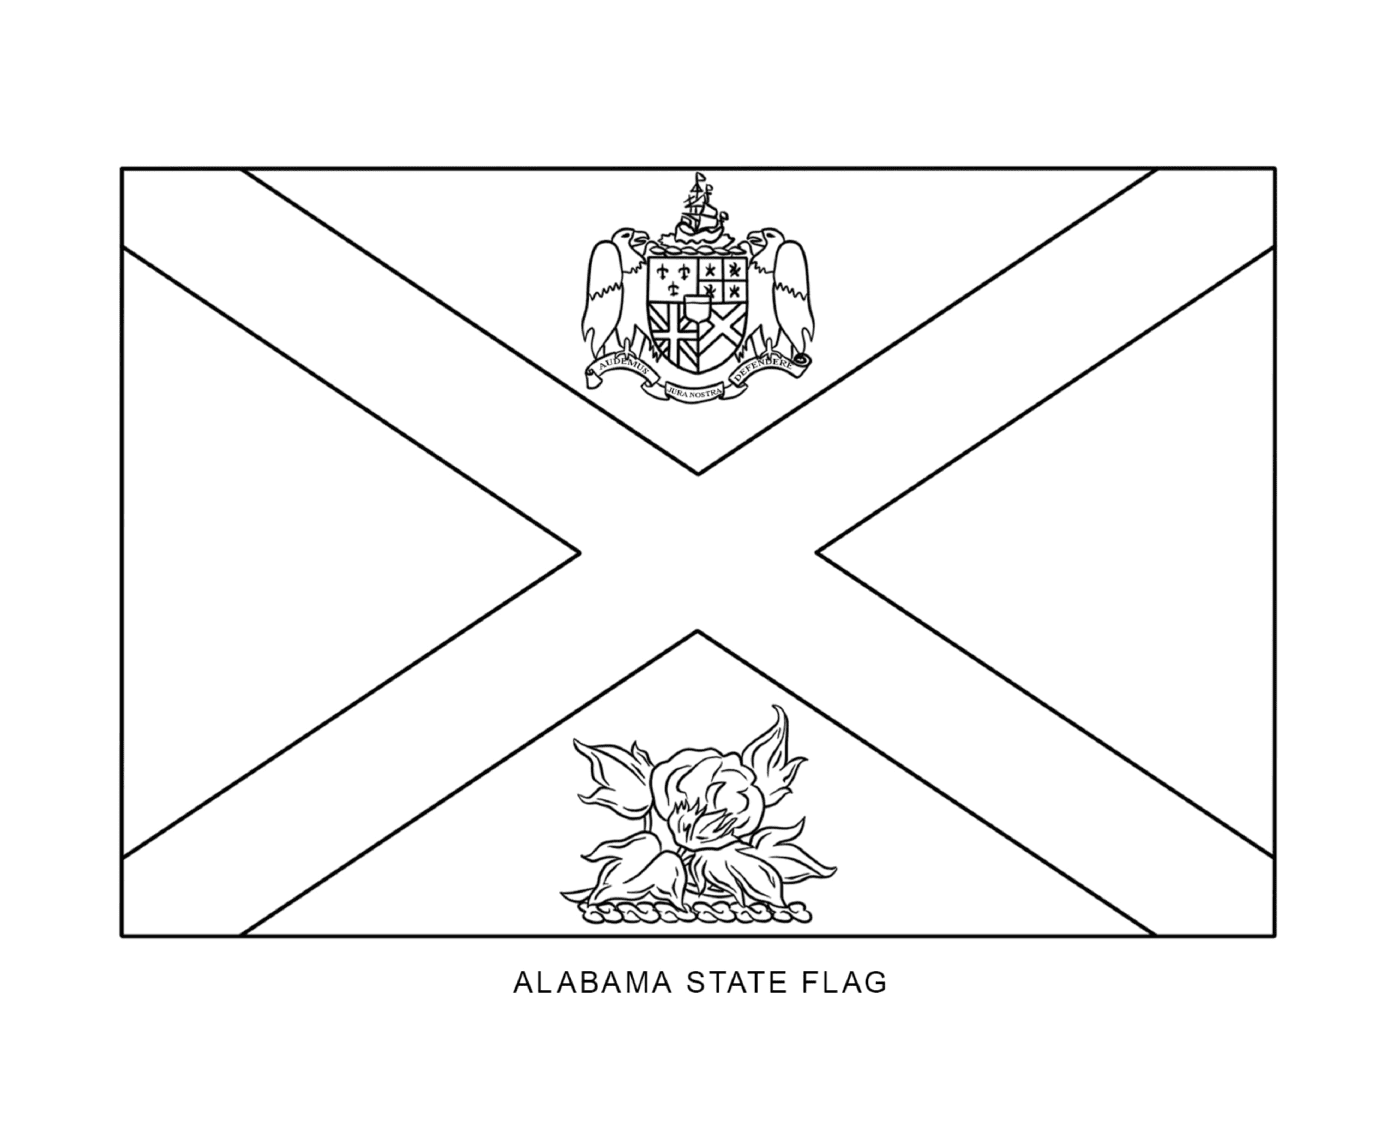   Drapeau de l'État de l'Alabama dessiné 